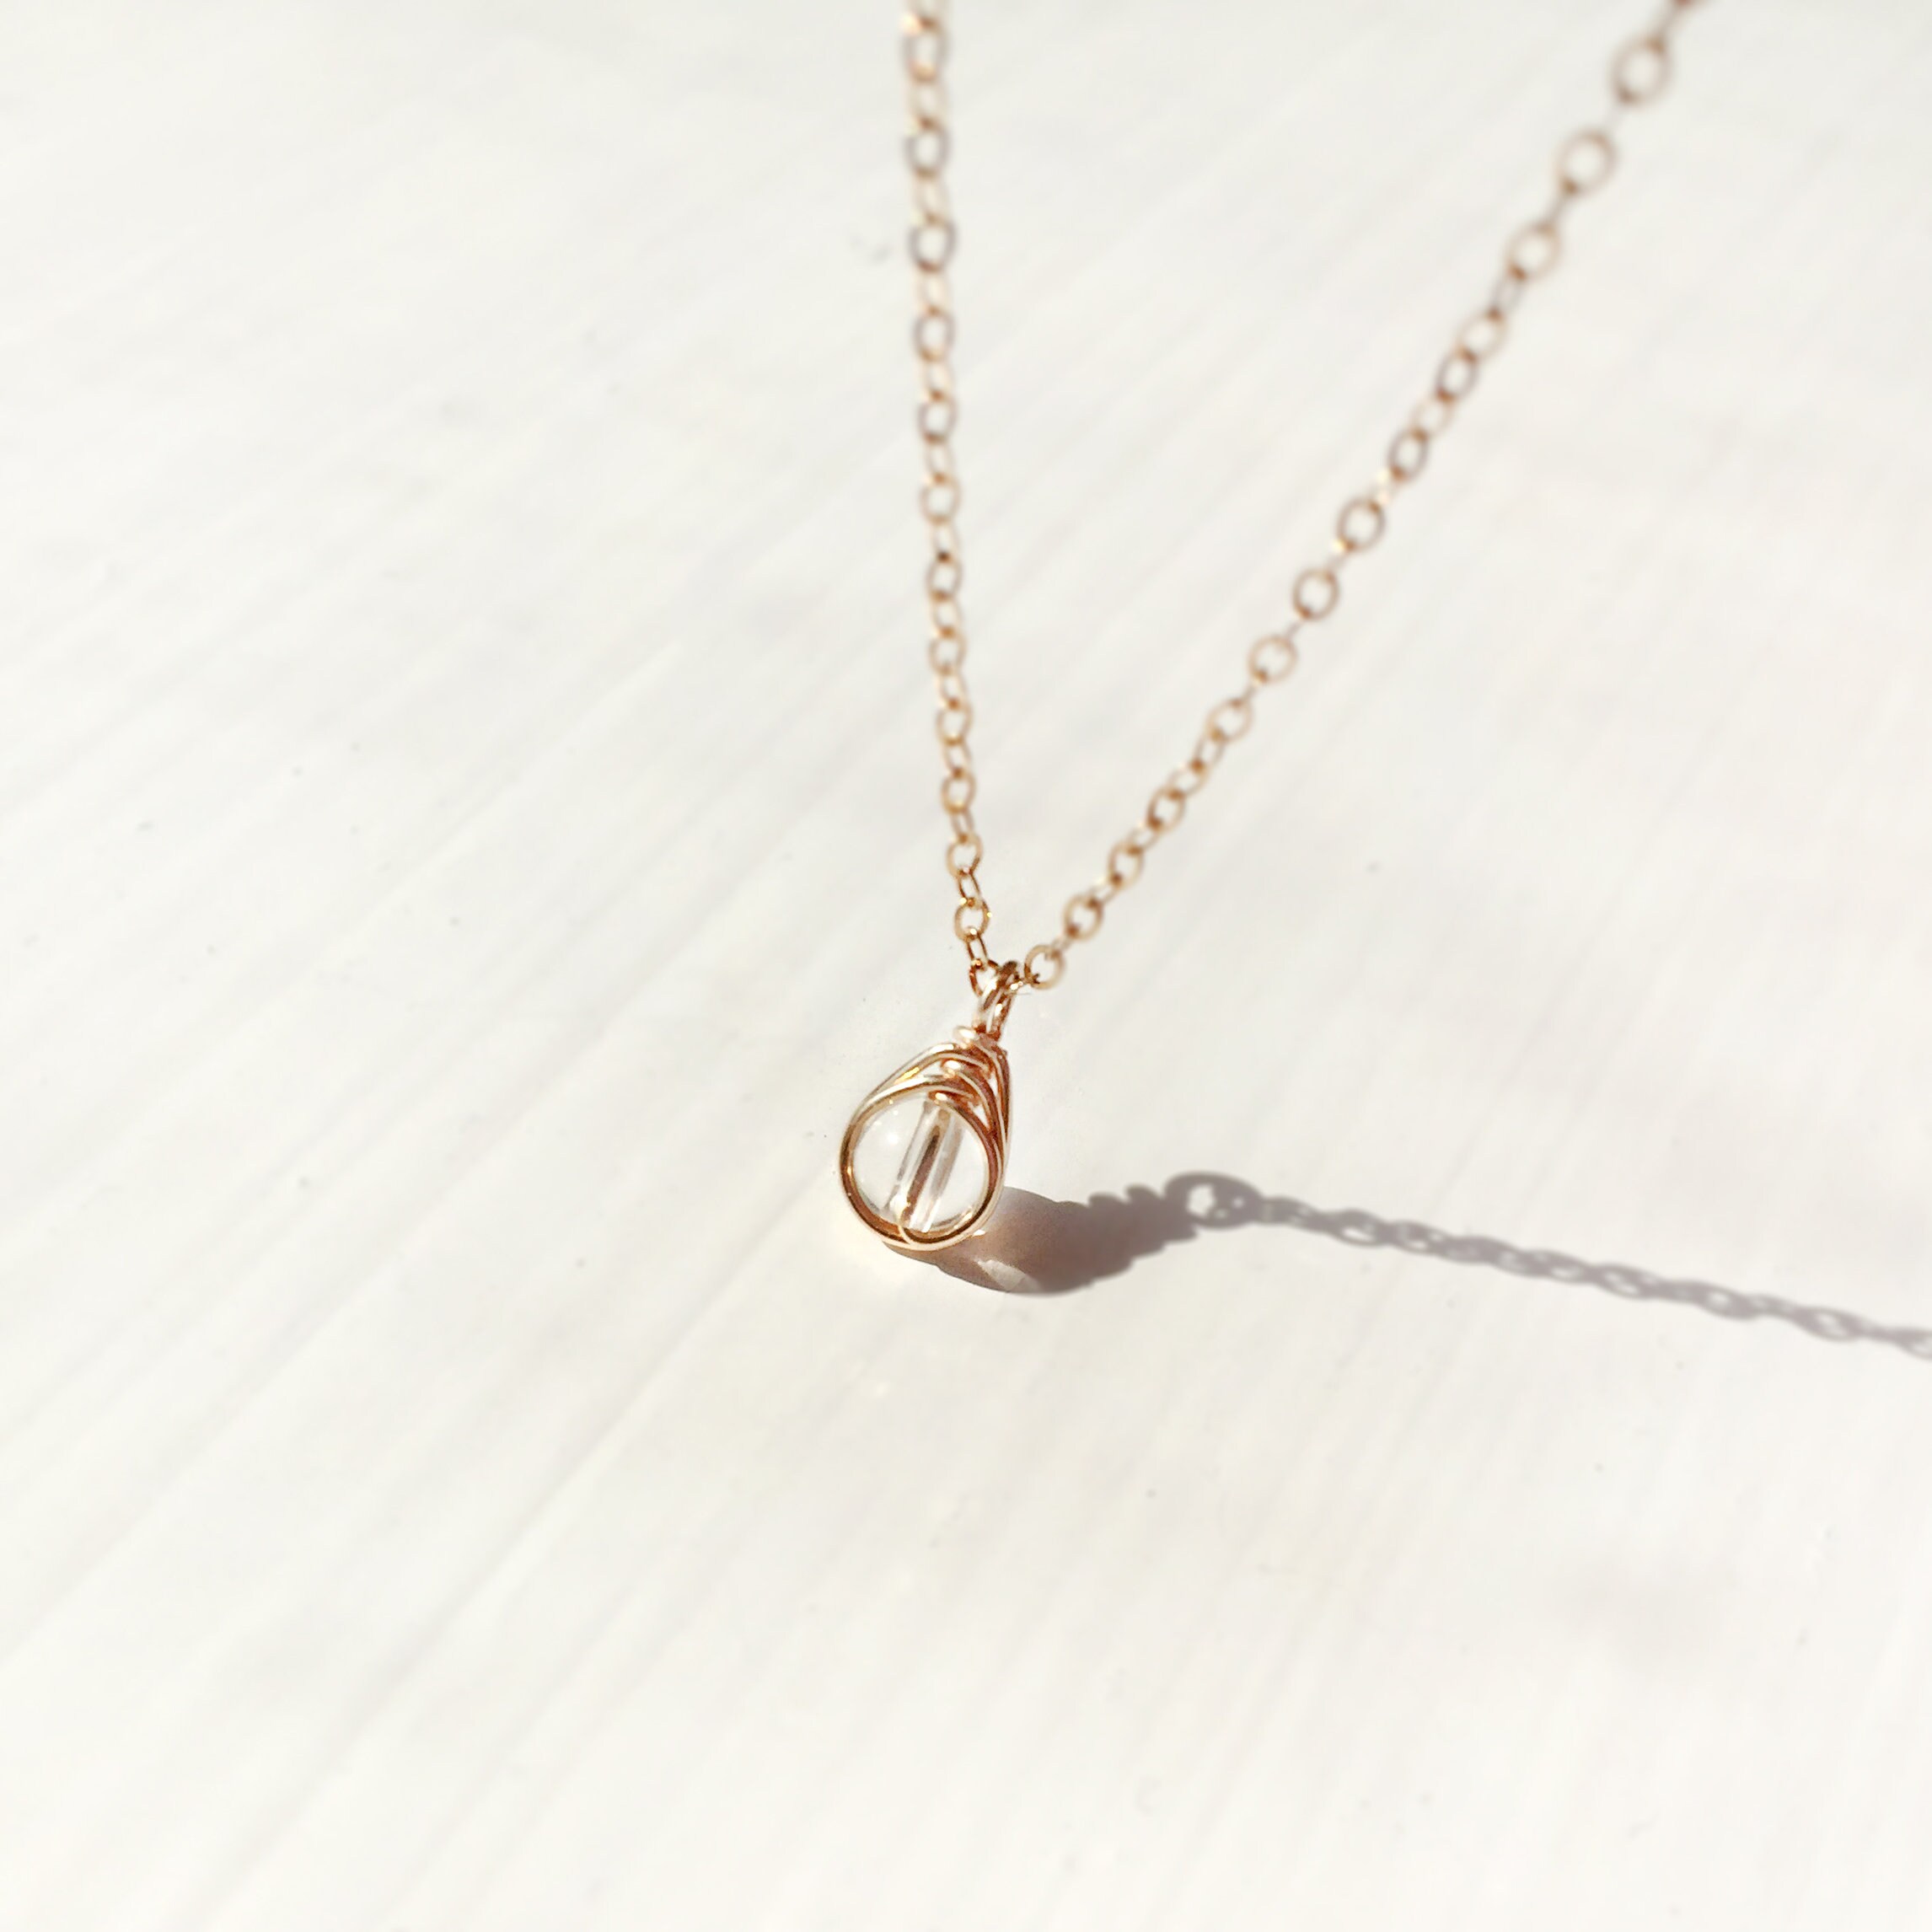 Tiny Clear Quartz Necklace 14K Gold Filled Rose Gold Filled | Etsy